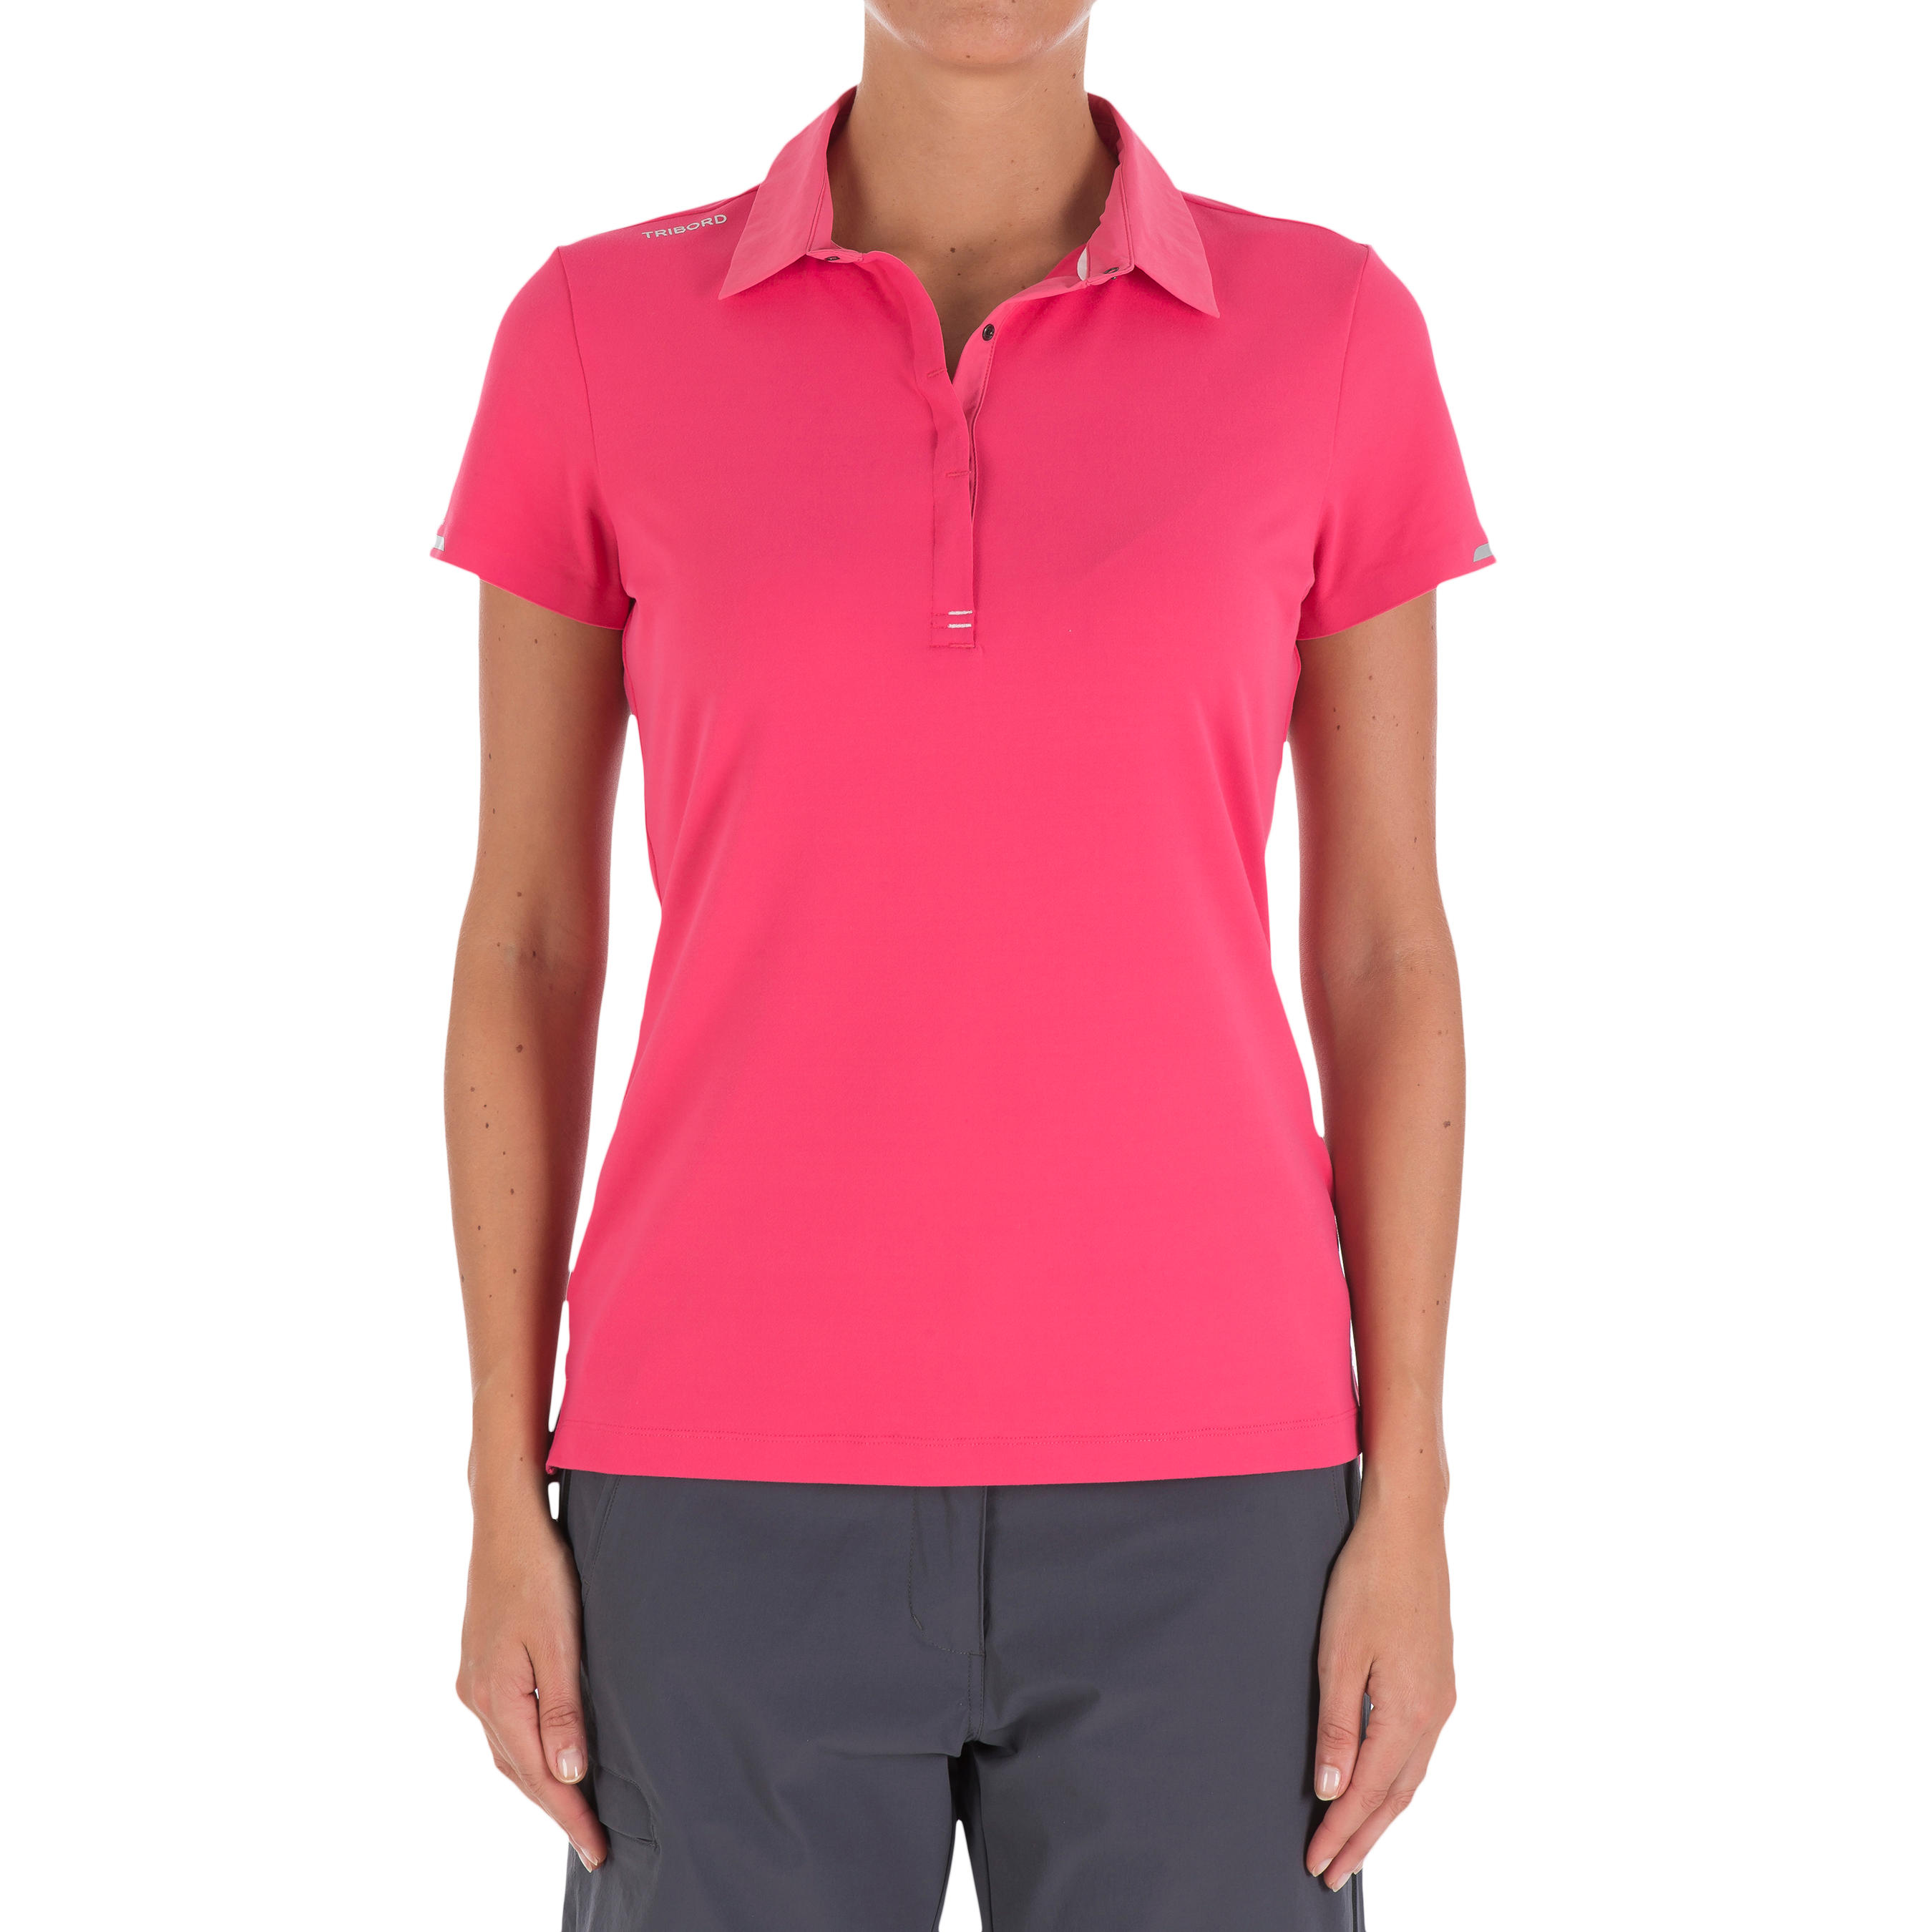 Women's Race short-sleeved sailing polo shirt pink 2/8